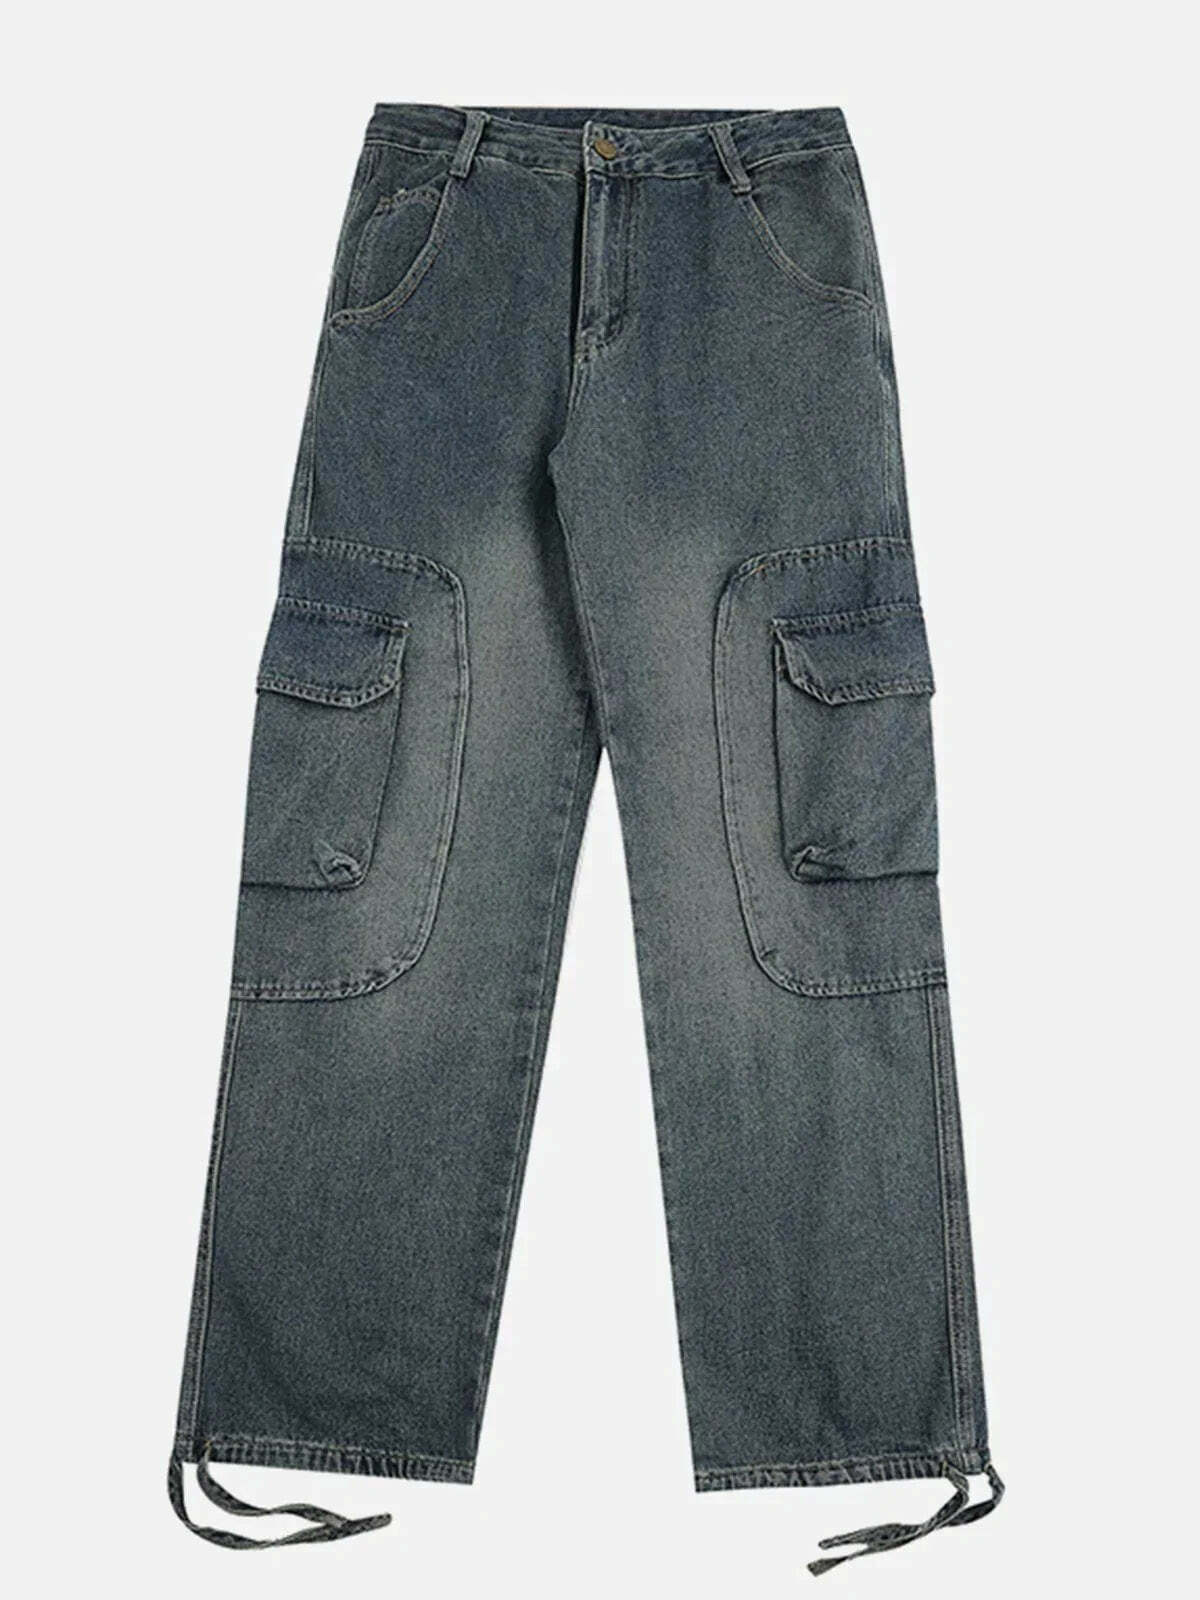 versatile multipocket cargo jeans edgy & functional streetwear 8672